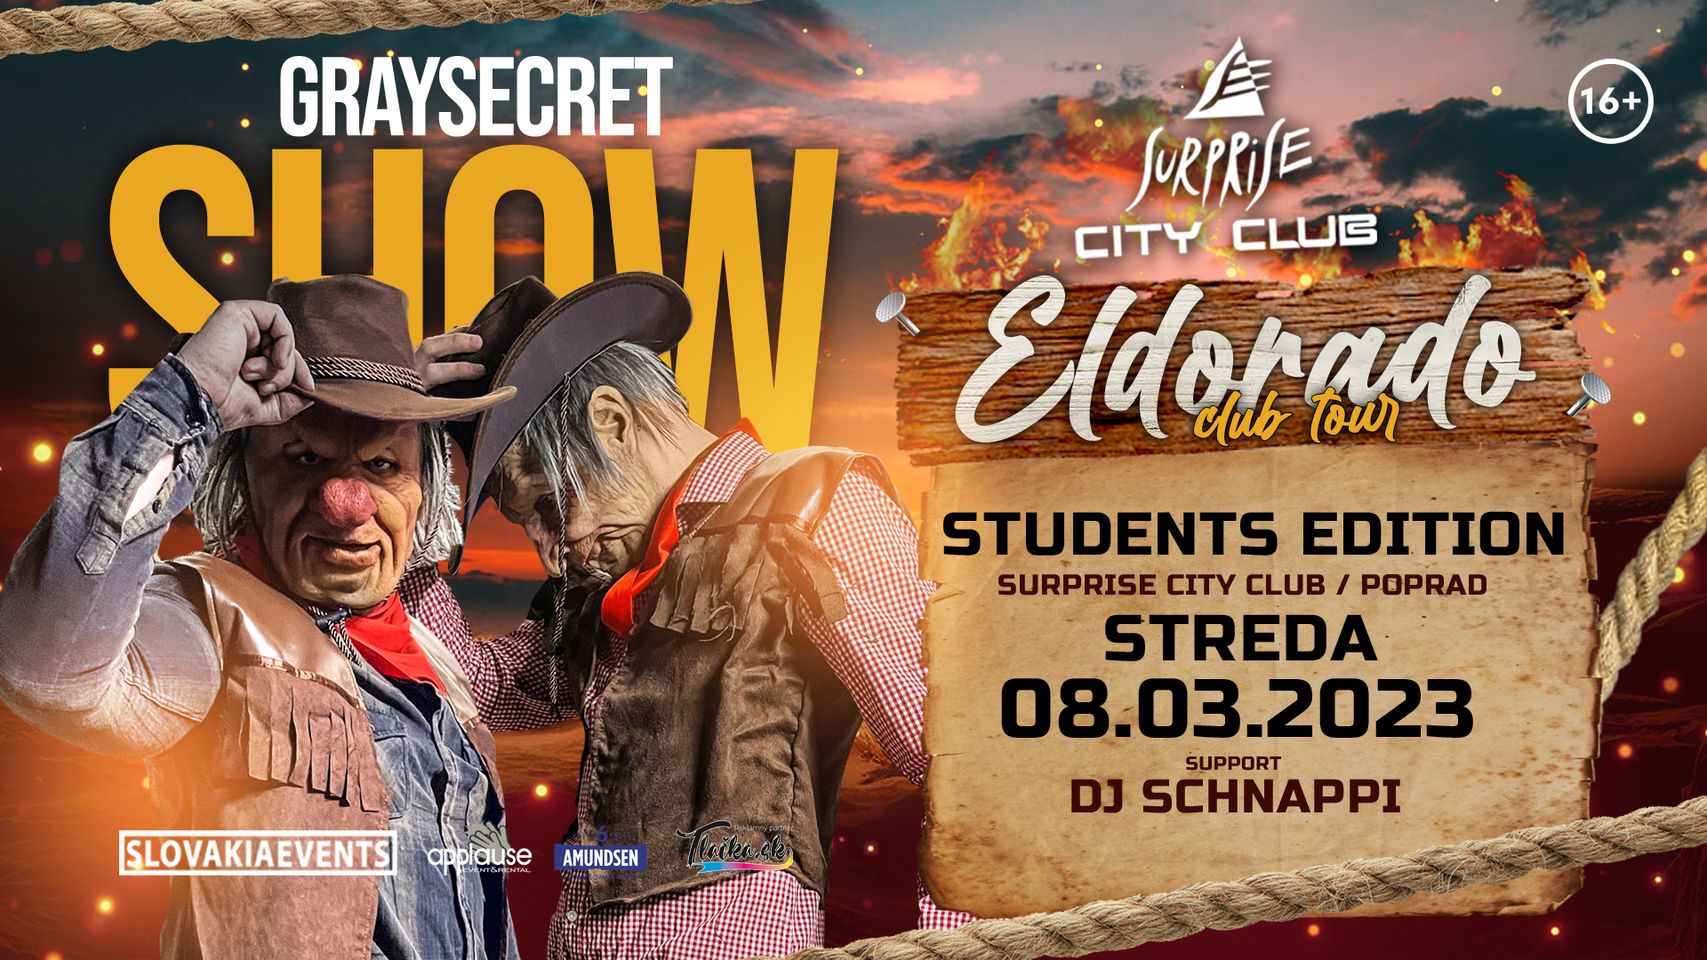 GRAYSECRET SHOW ELDORADO tour/students edition SURPRISE